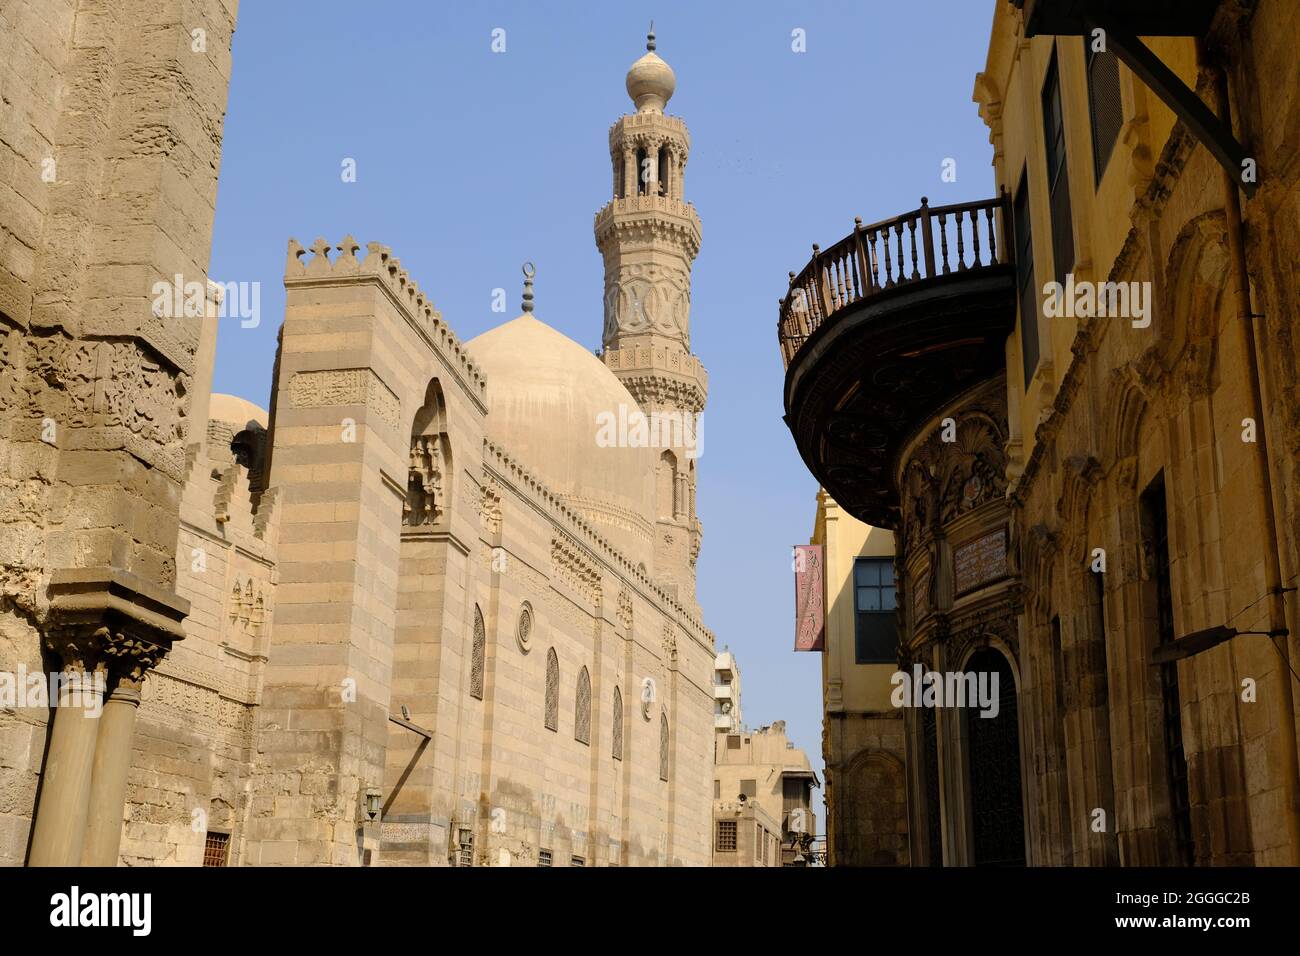 Egypt Cairo - Al-Muizz street Old city Stock Photo